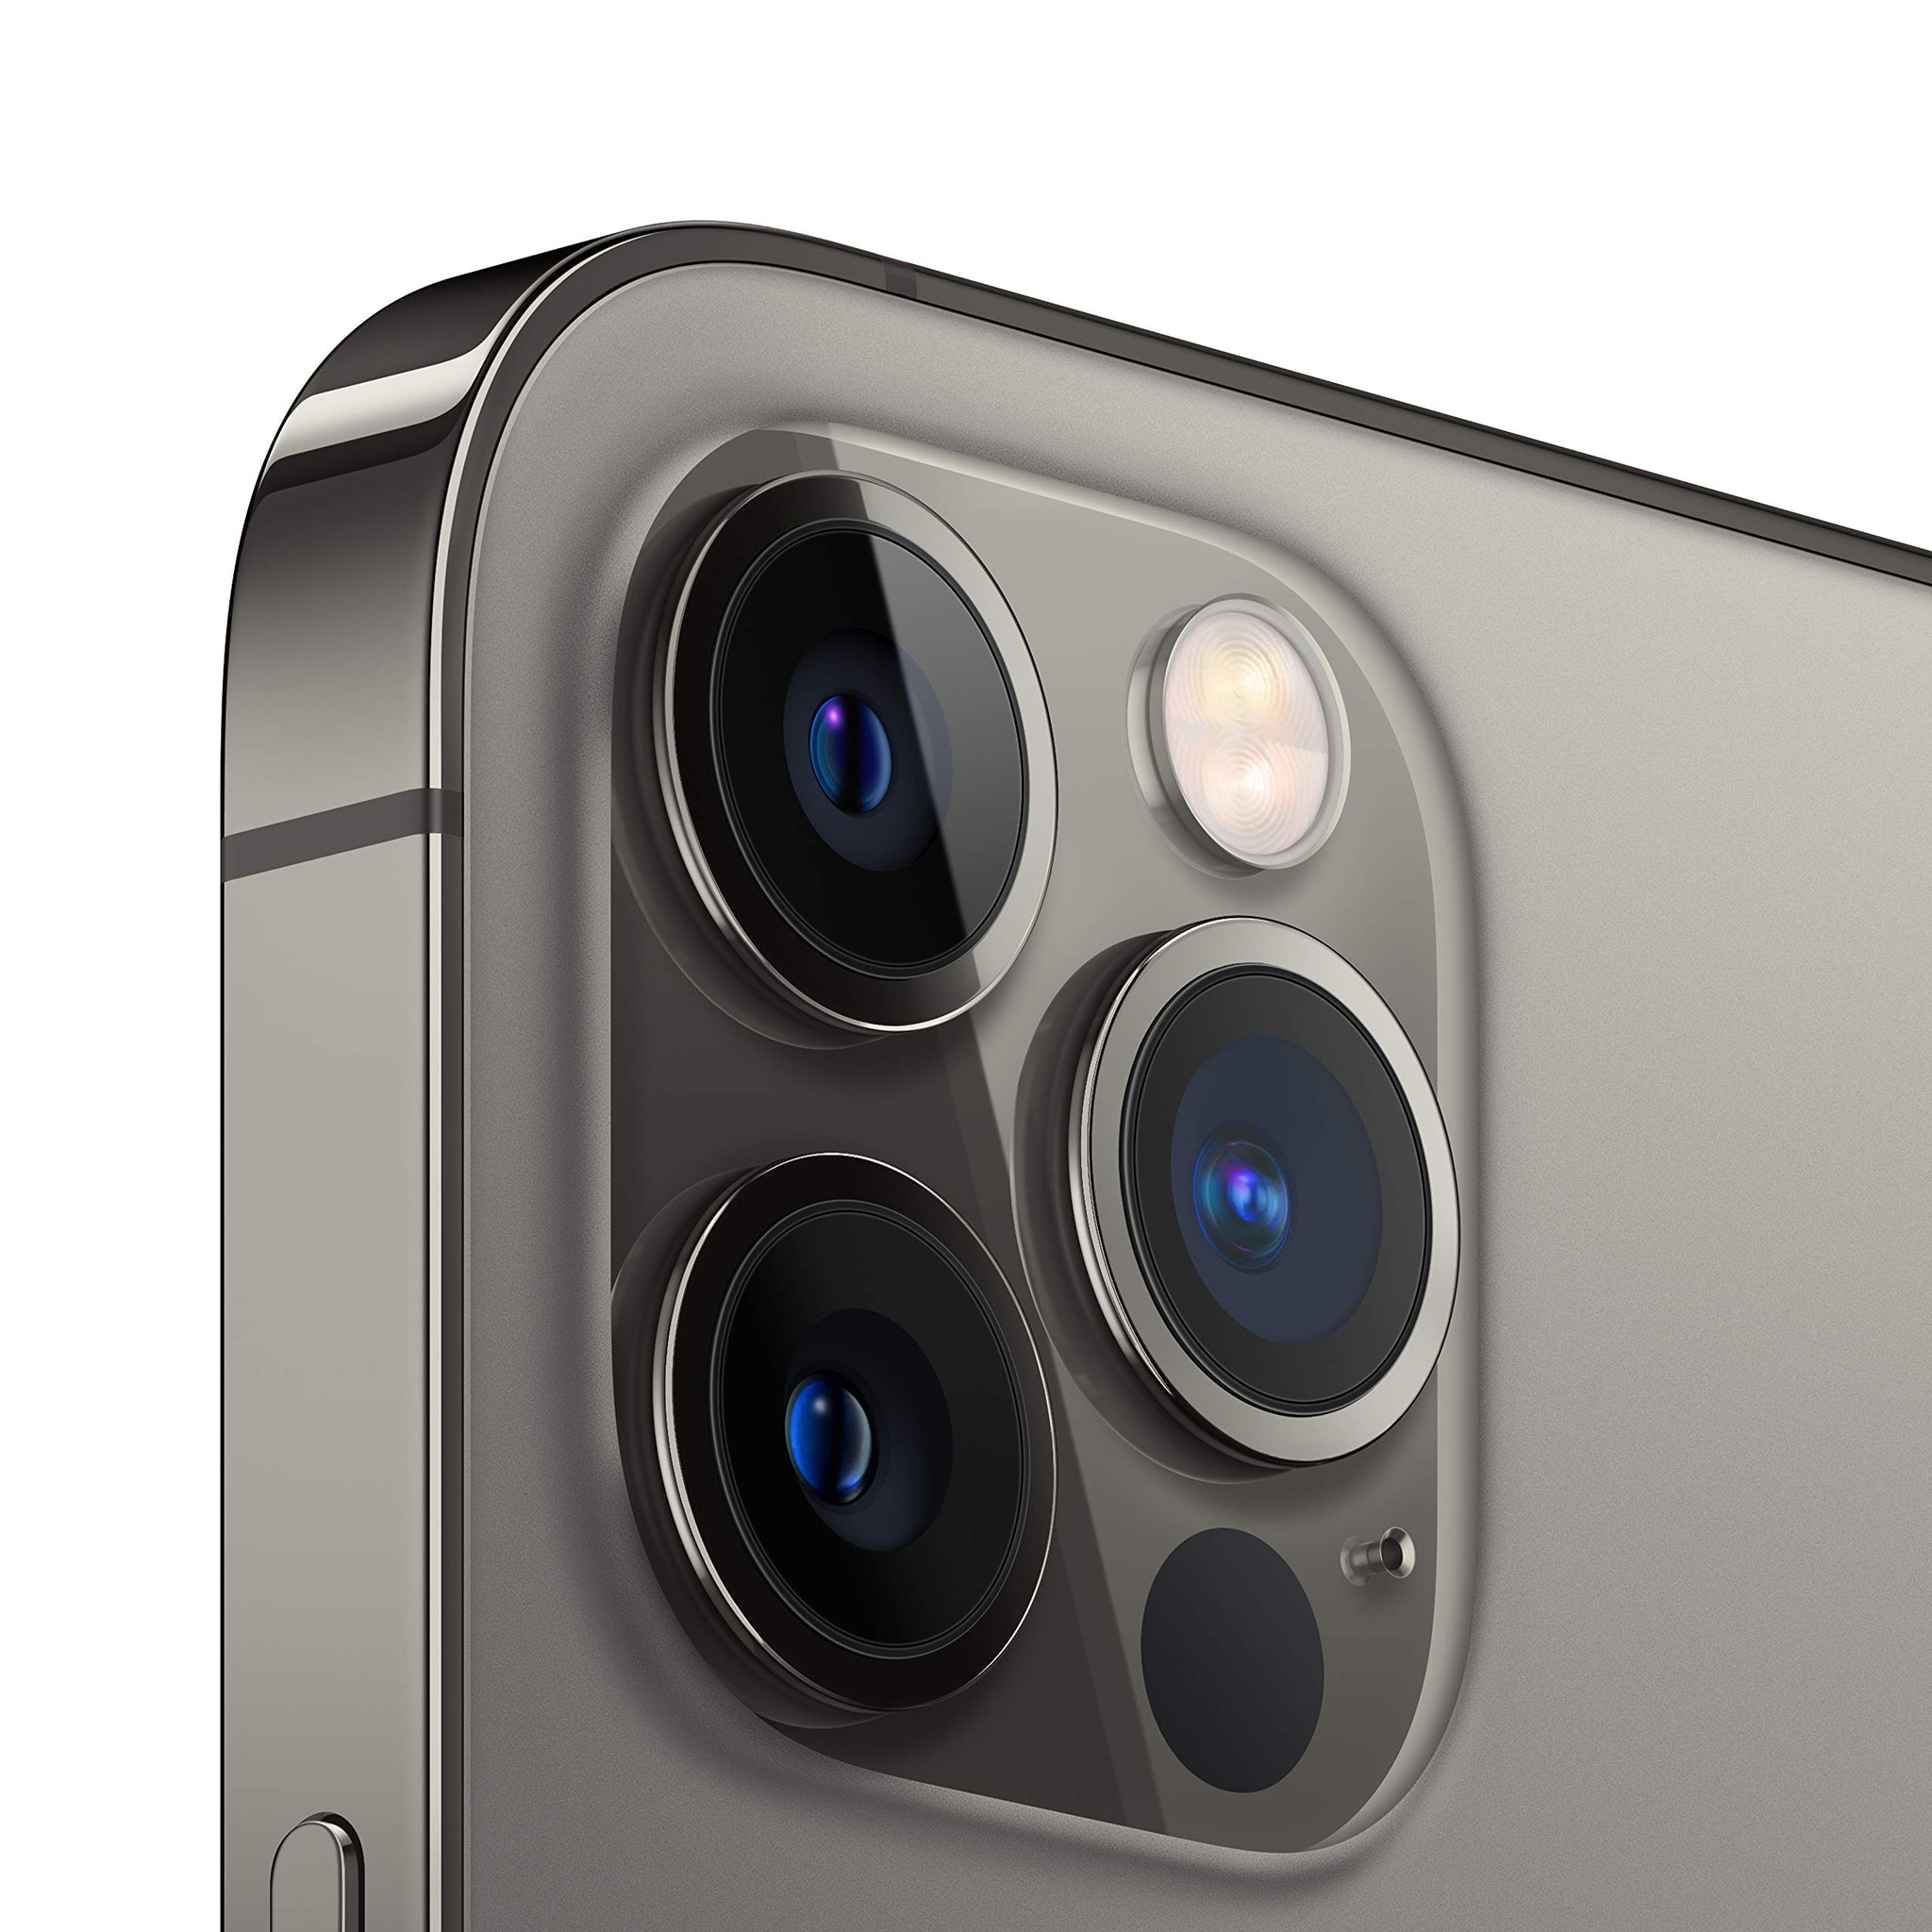 Apple iPhone 12 Pro Max 256GB - Factory Unlocked